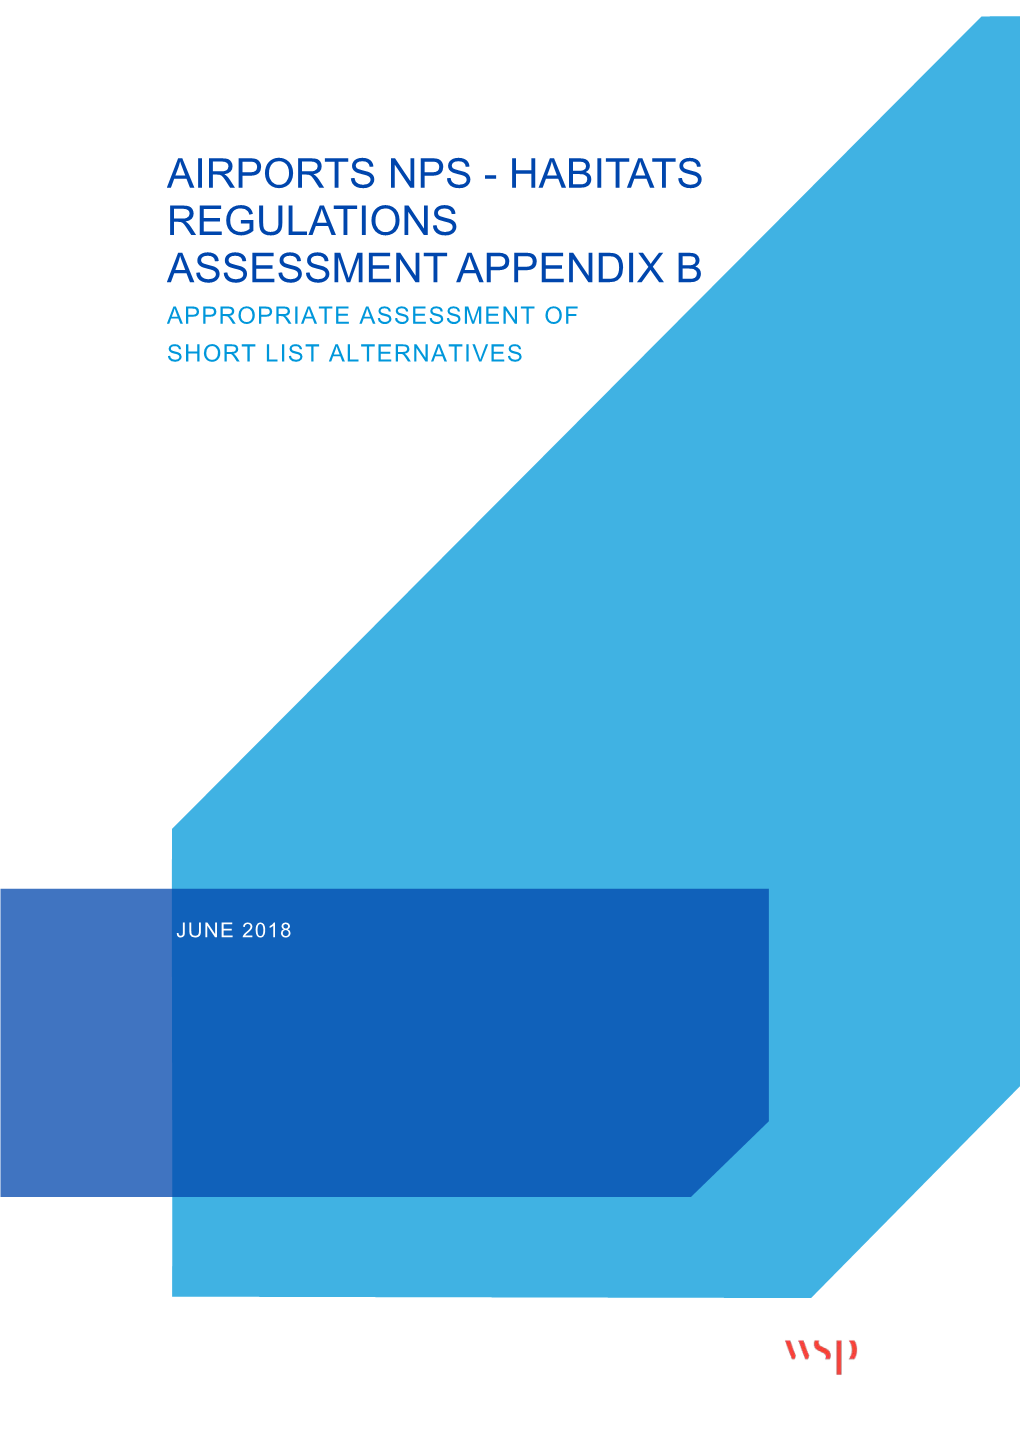 Airports Nps - Habitats Regulations Assessment Appendix B Appropriate Assessment of Short List Alternatives